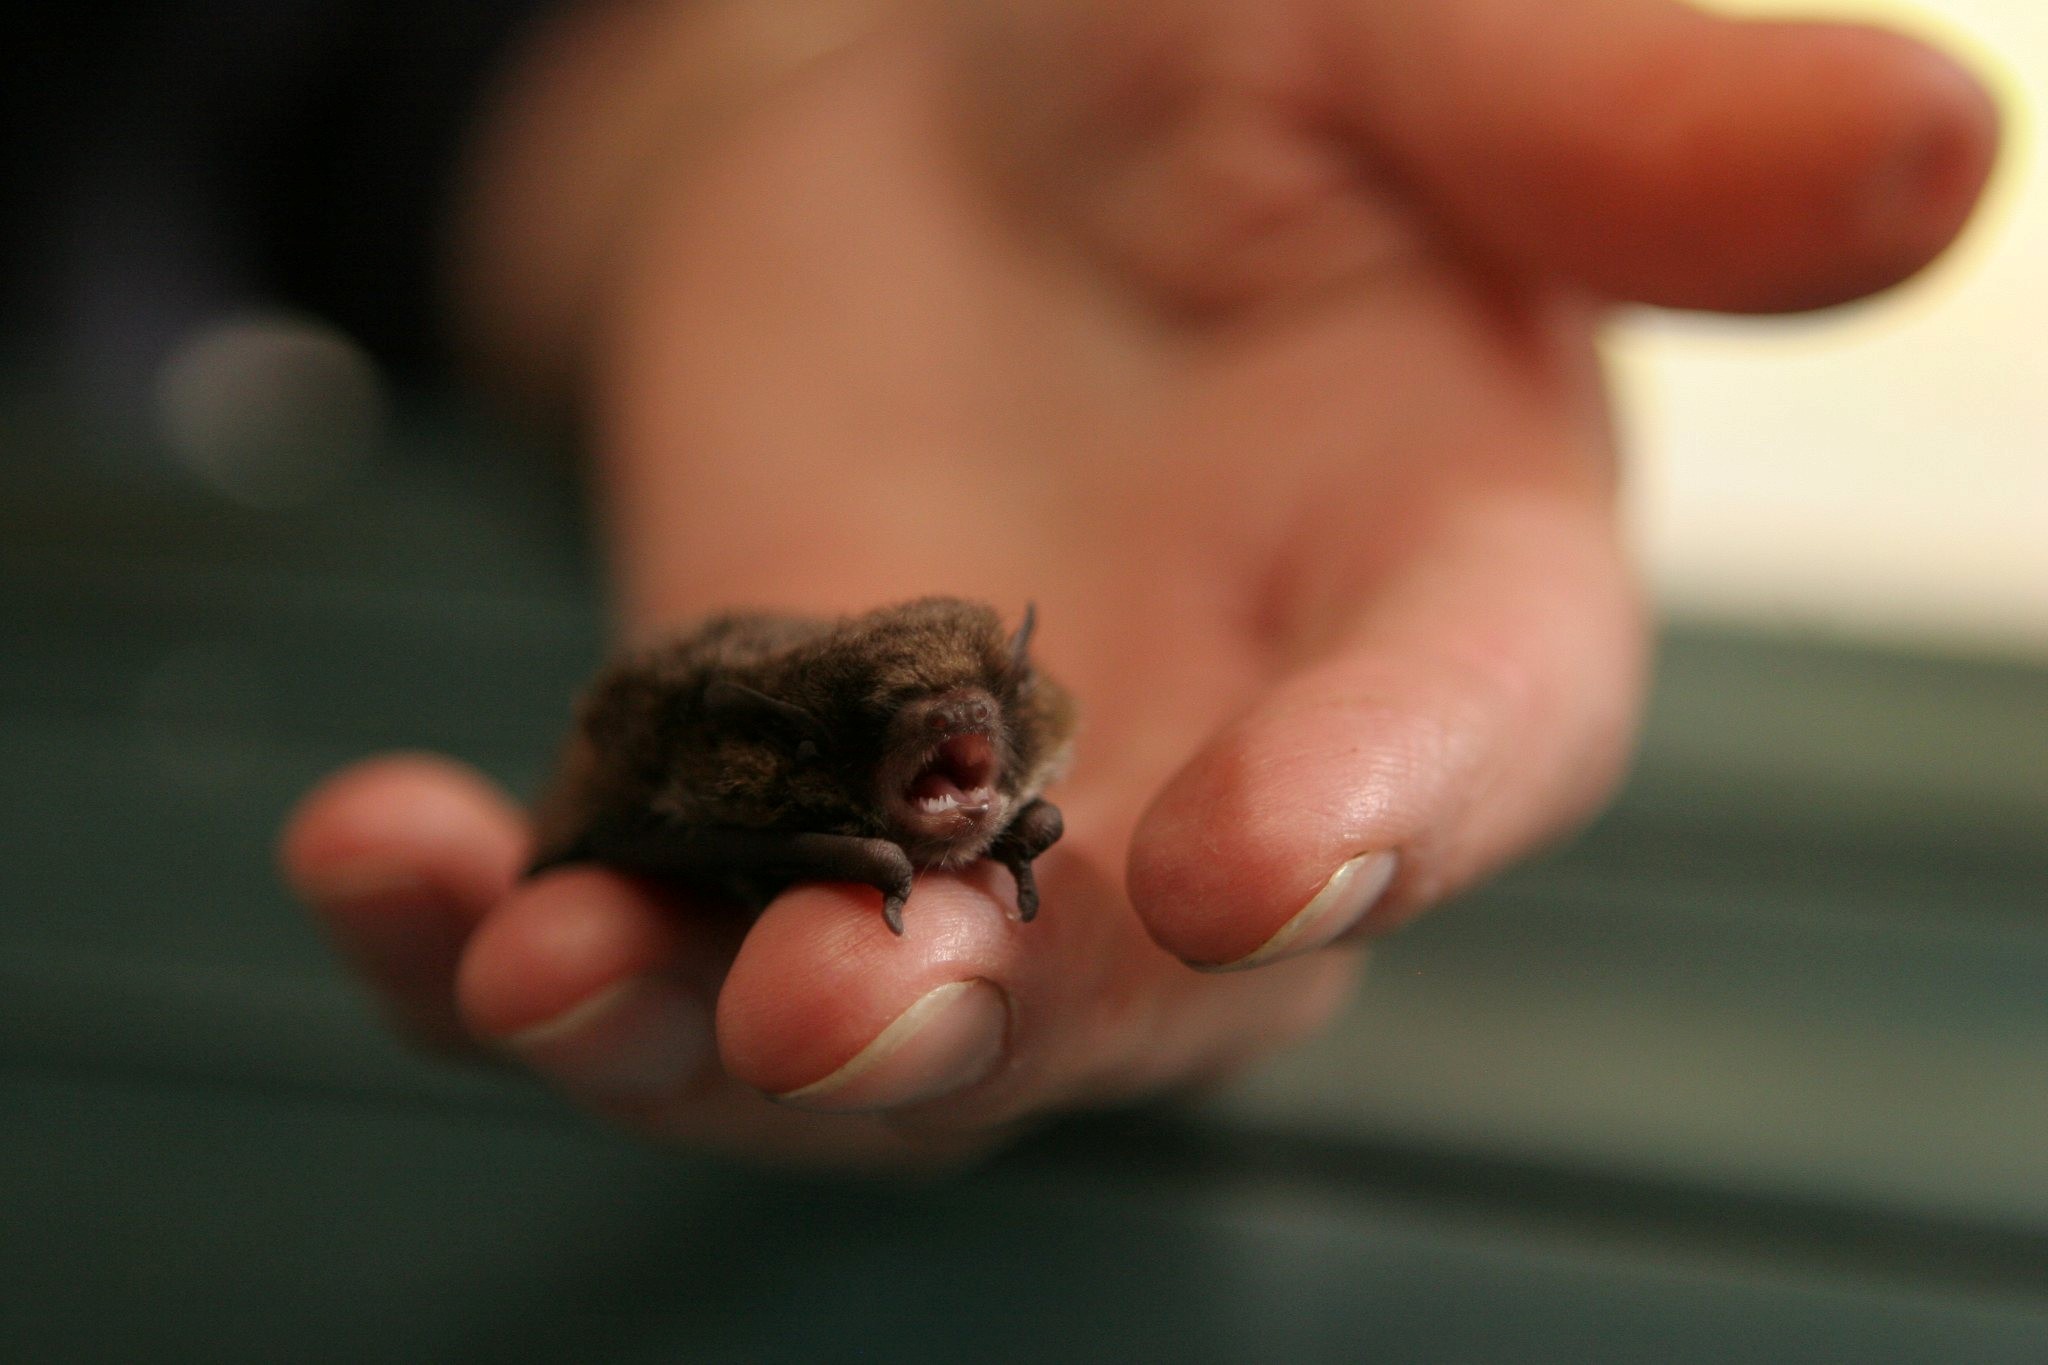 Little Forest Bat - Vespadelus vilturnus